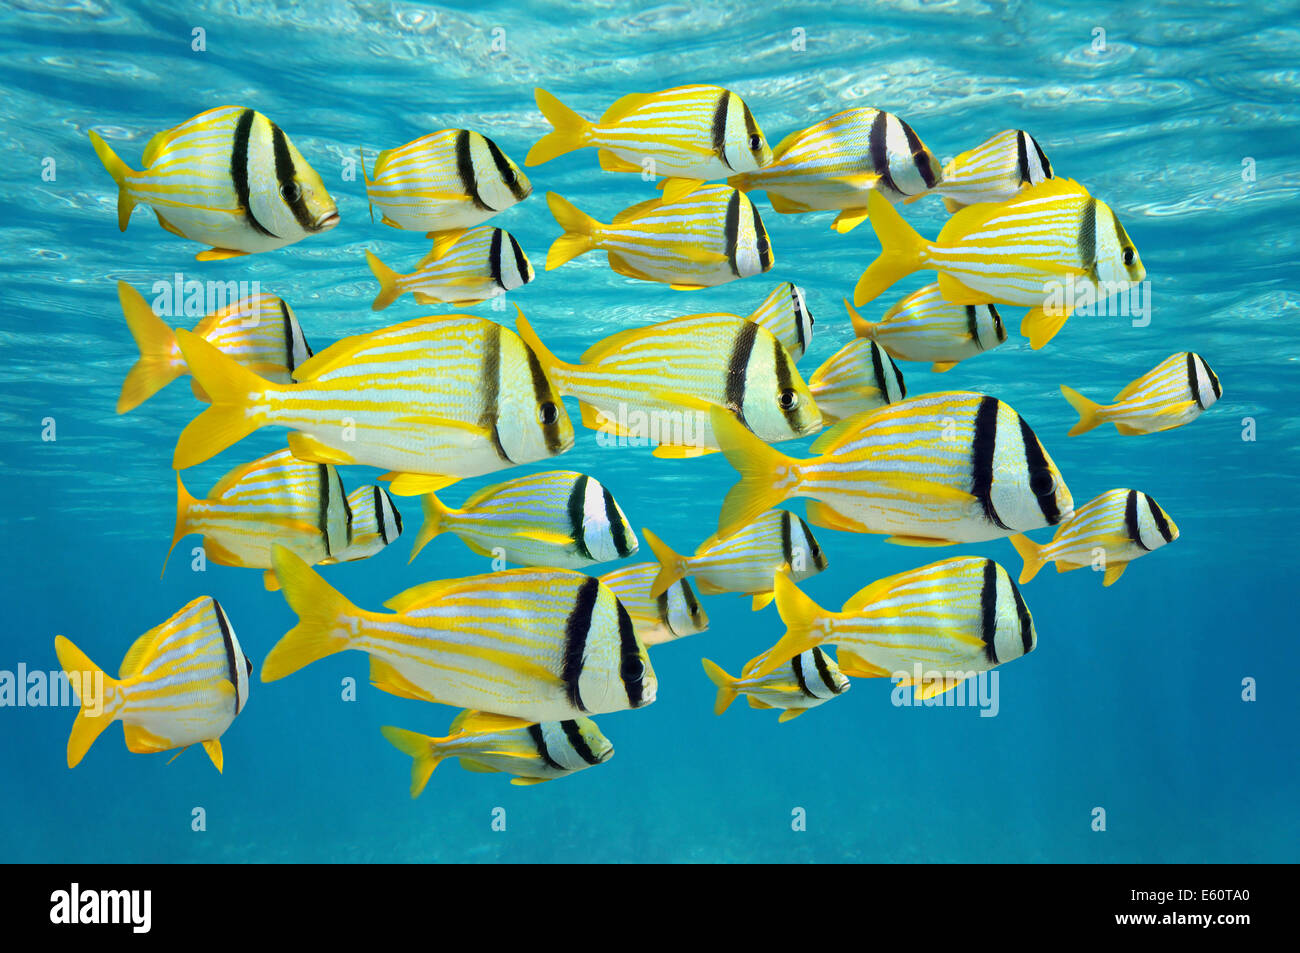 school of tropical fish, porkfish Anisotremus virginicus near water surface, Caribbean sea Stock Photo